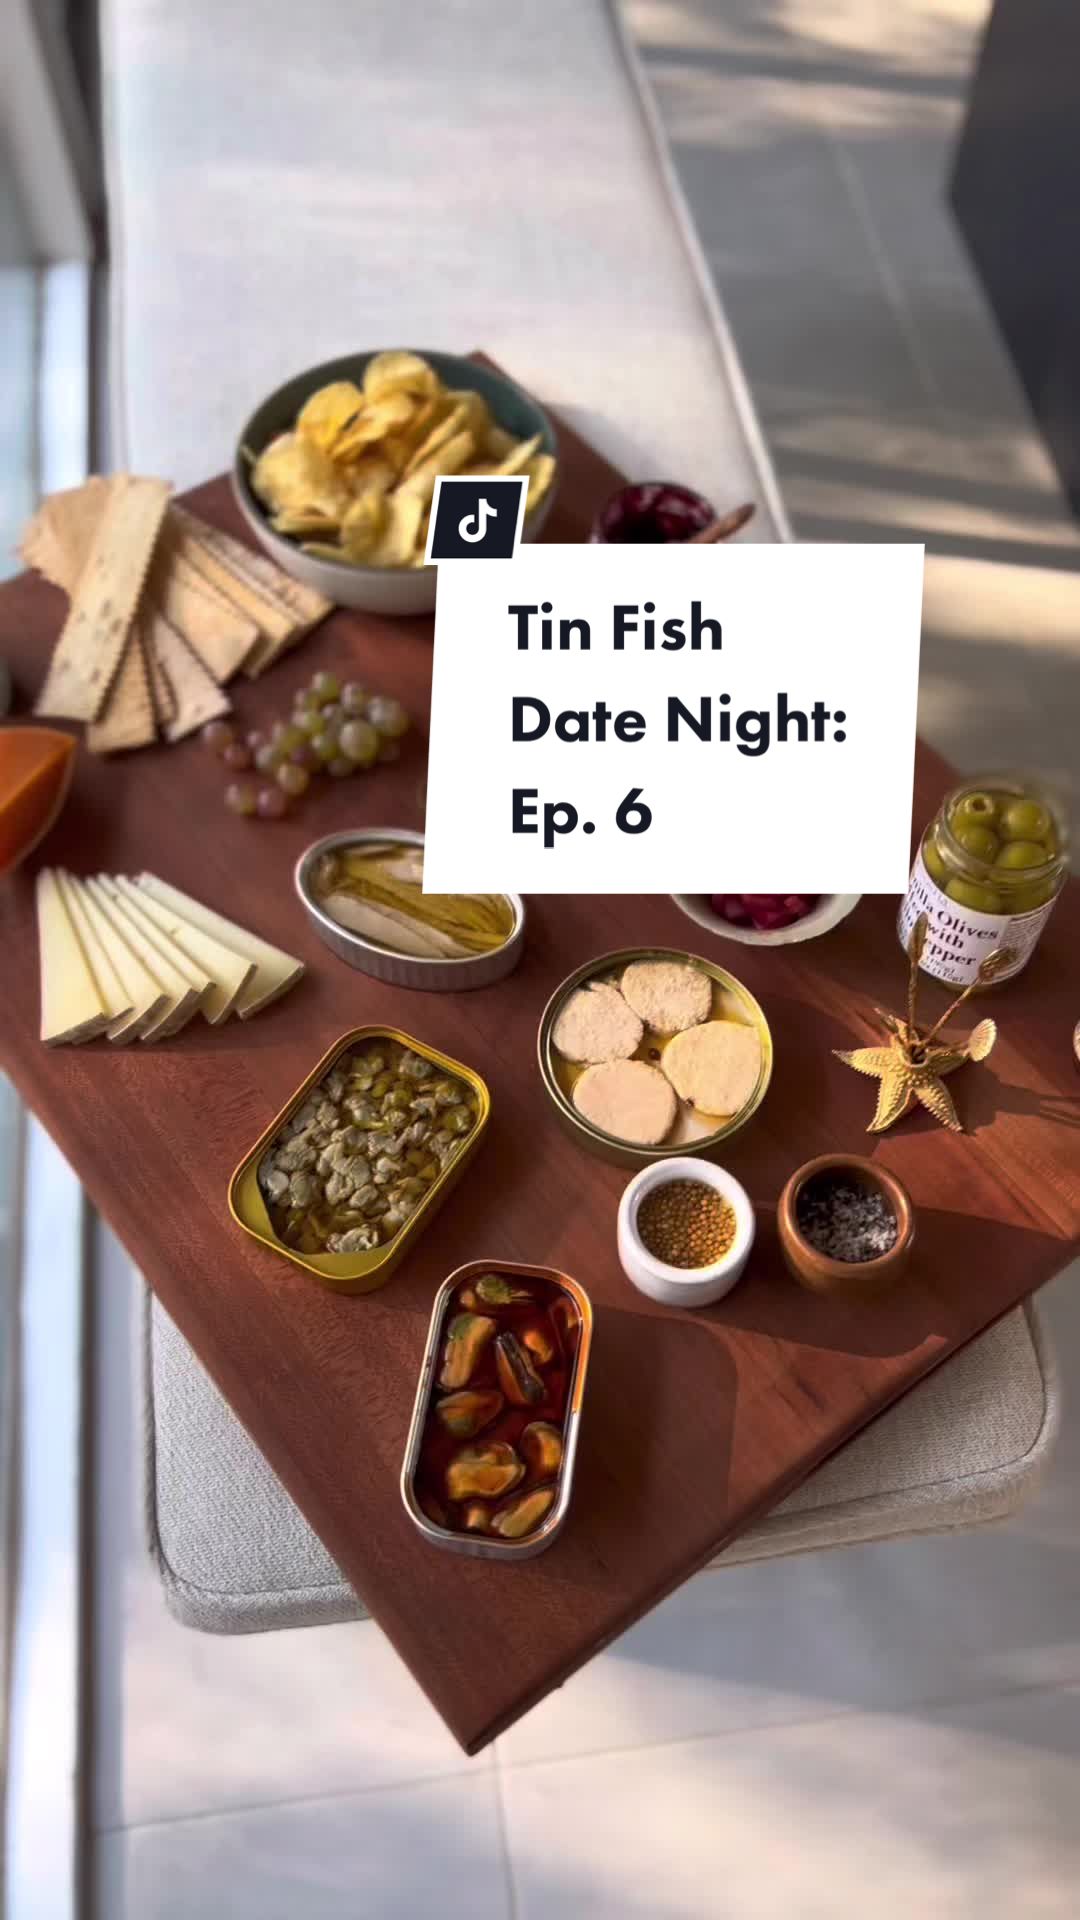 Friday Night #tinfishdatenight we missed a week while traveling and are stoked for tonight!  #chefsoftiktok #datenightideas #easydinnerrecipes #tinnedfish #sardines #tinnedfish